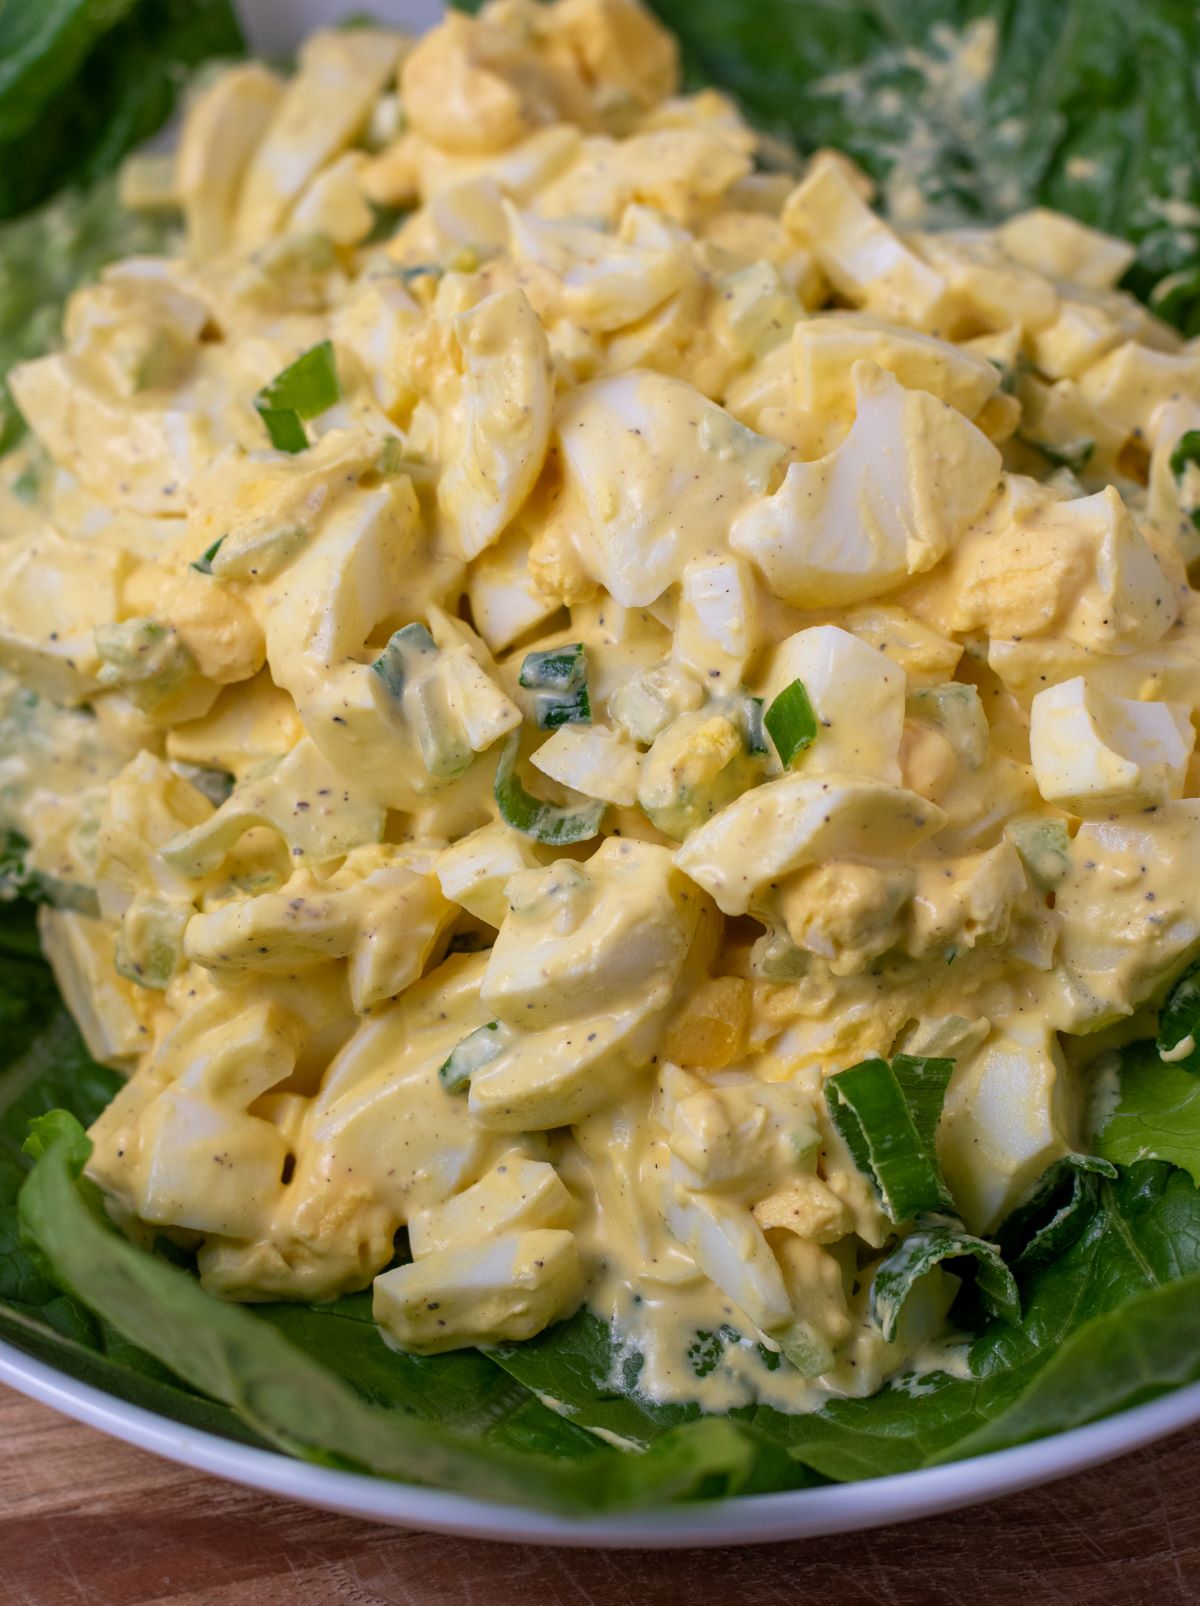 keto egg salad served in lettuce leaves